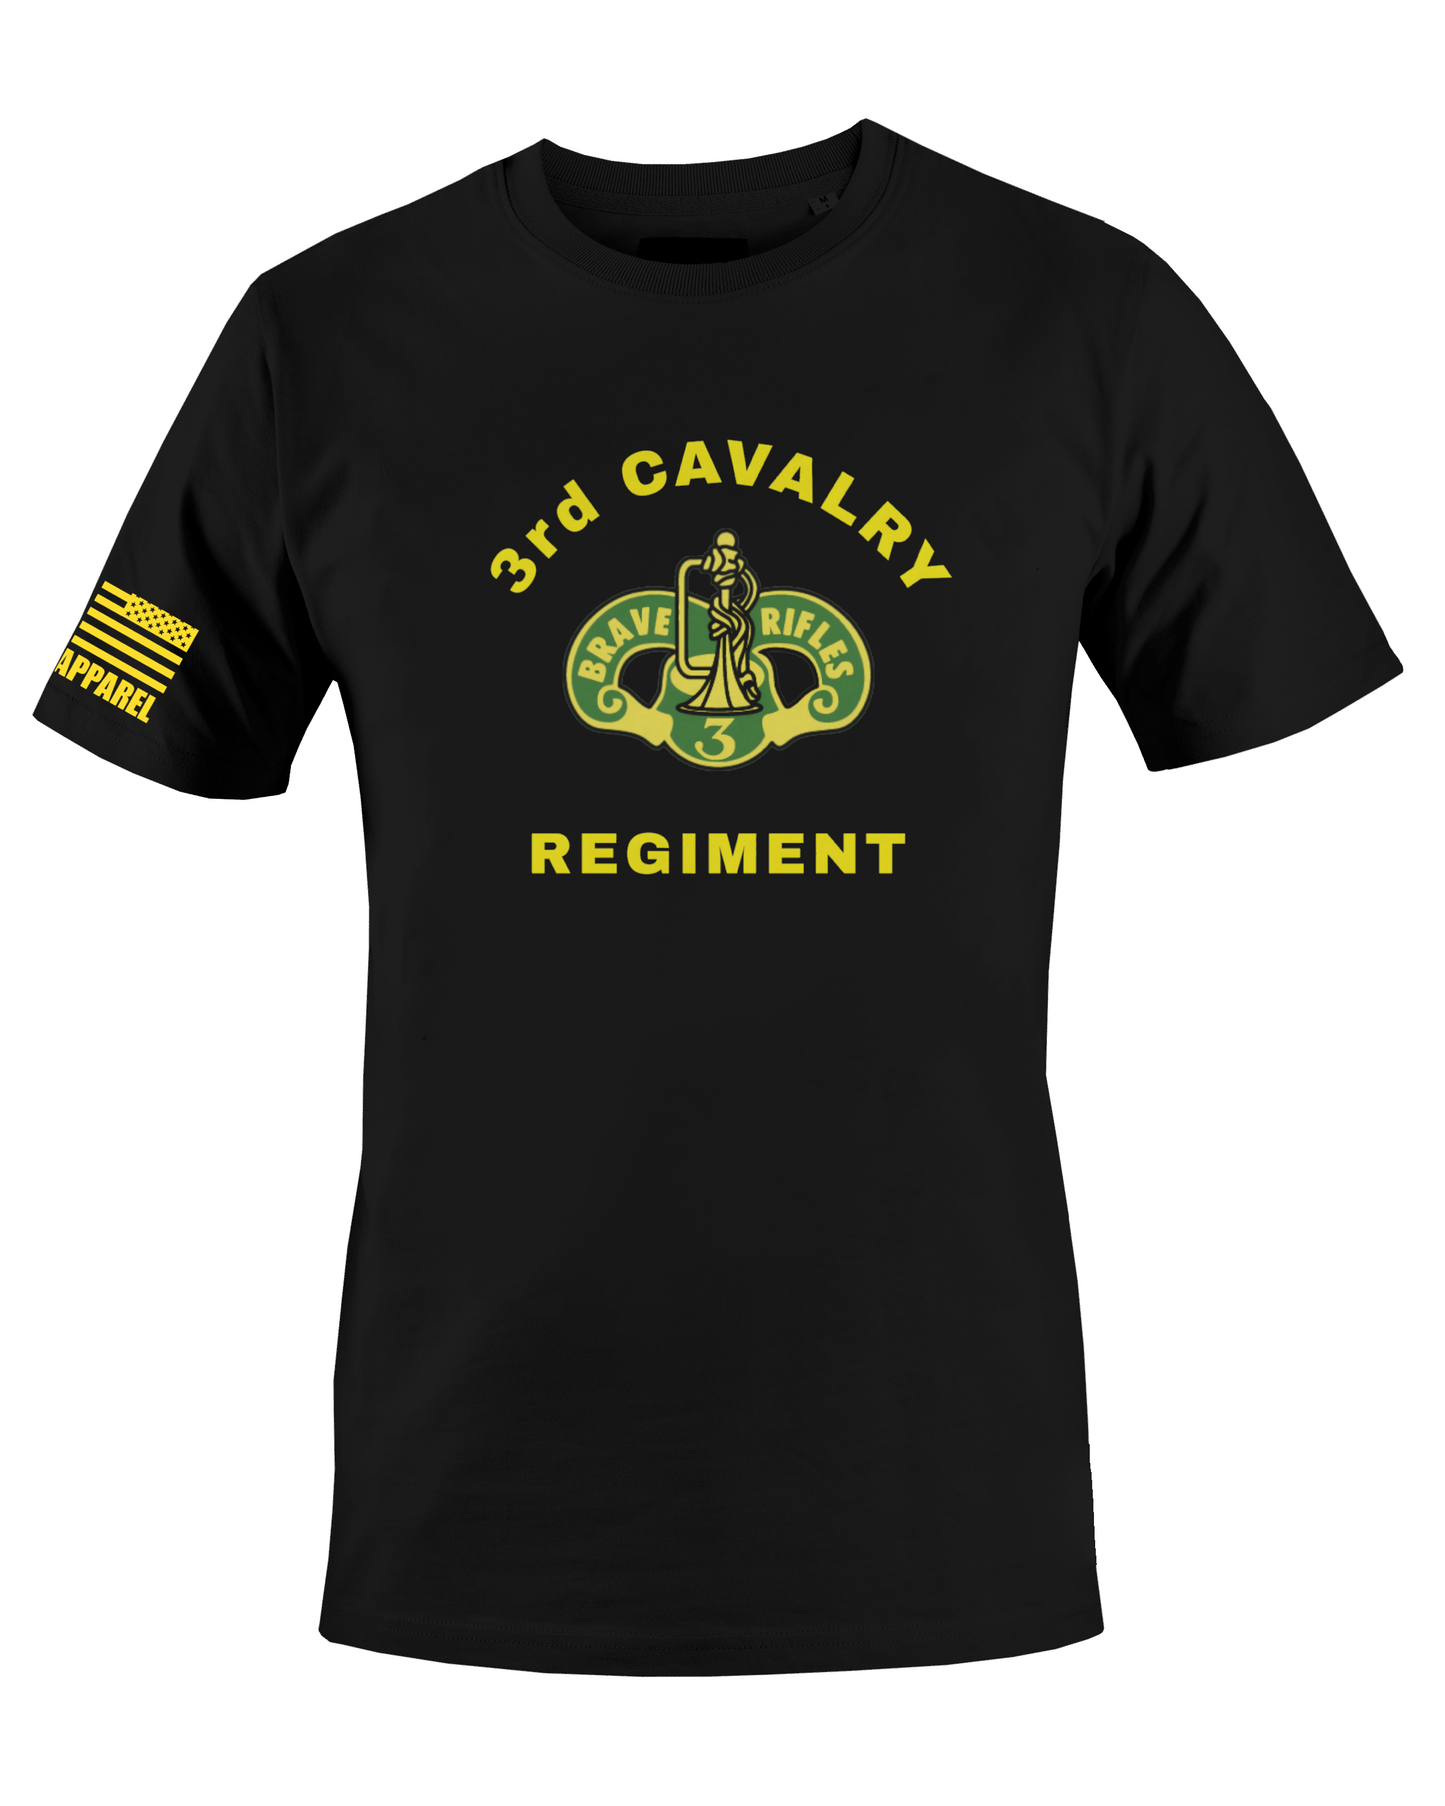 3rd CAVALRY REGIMENT